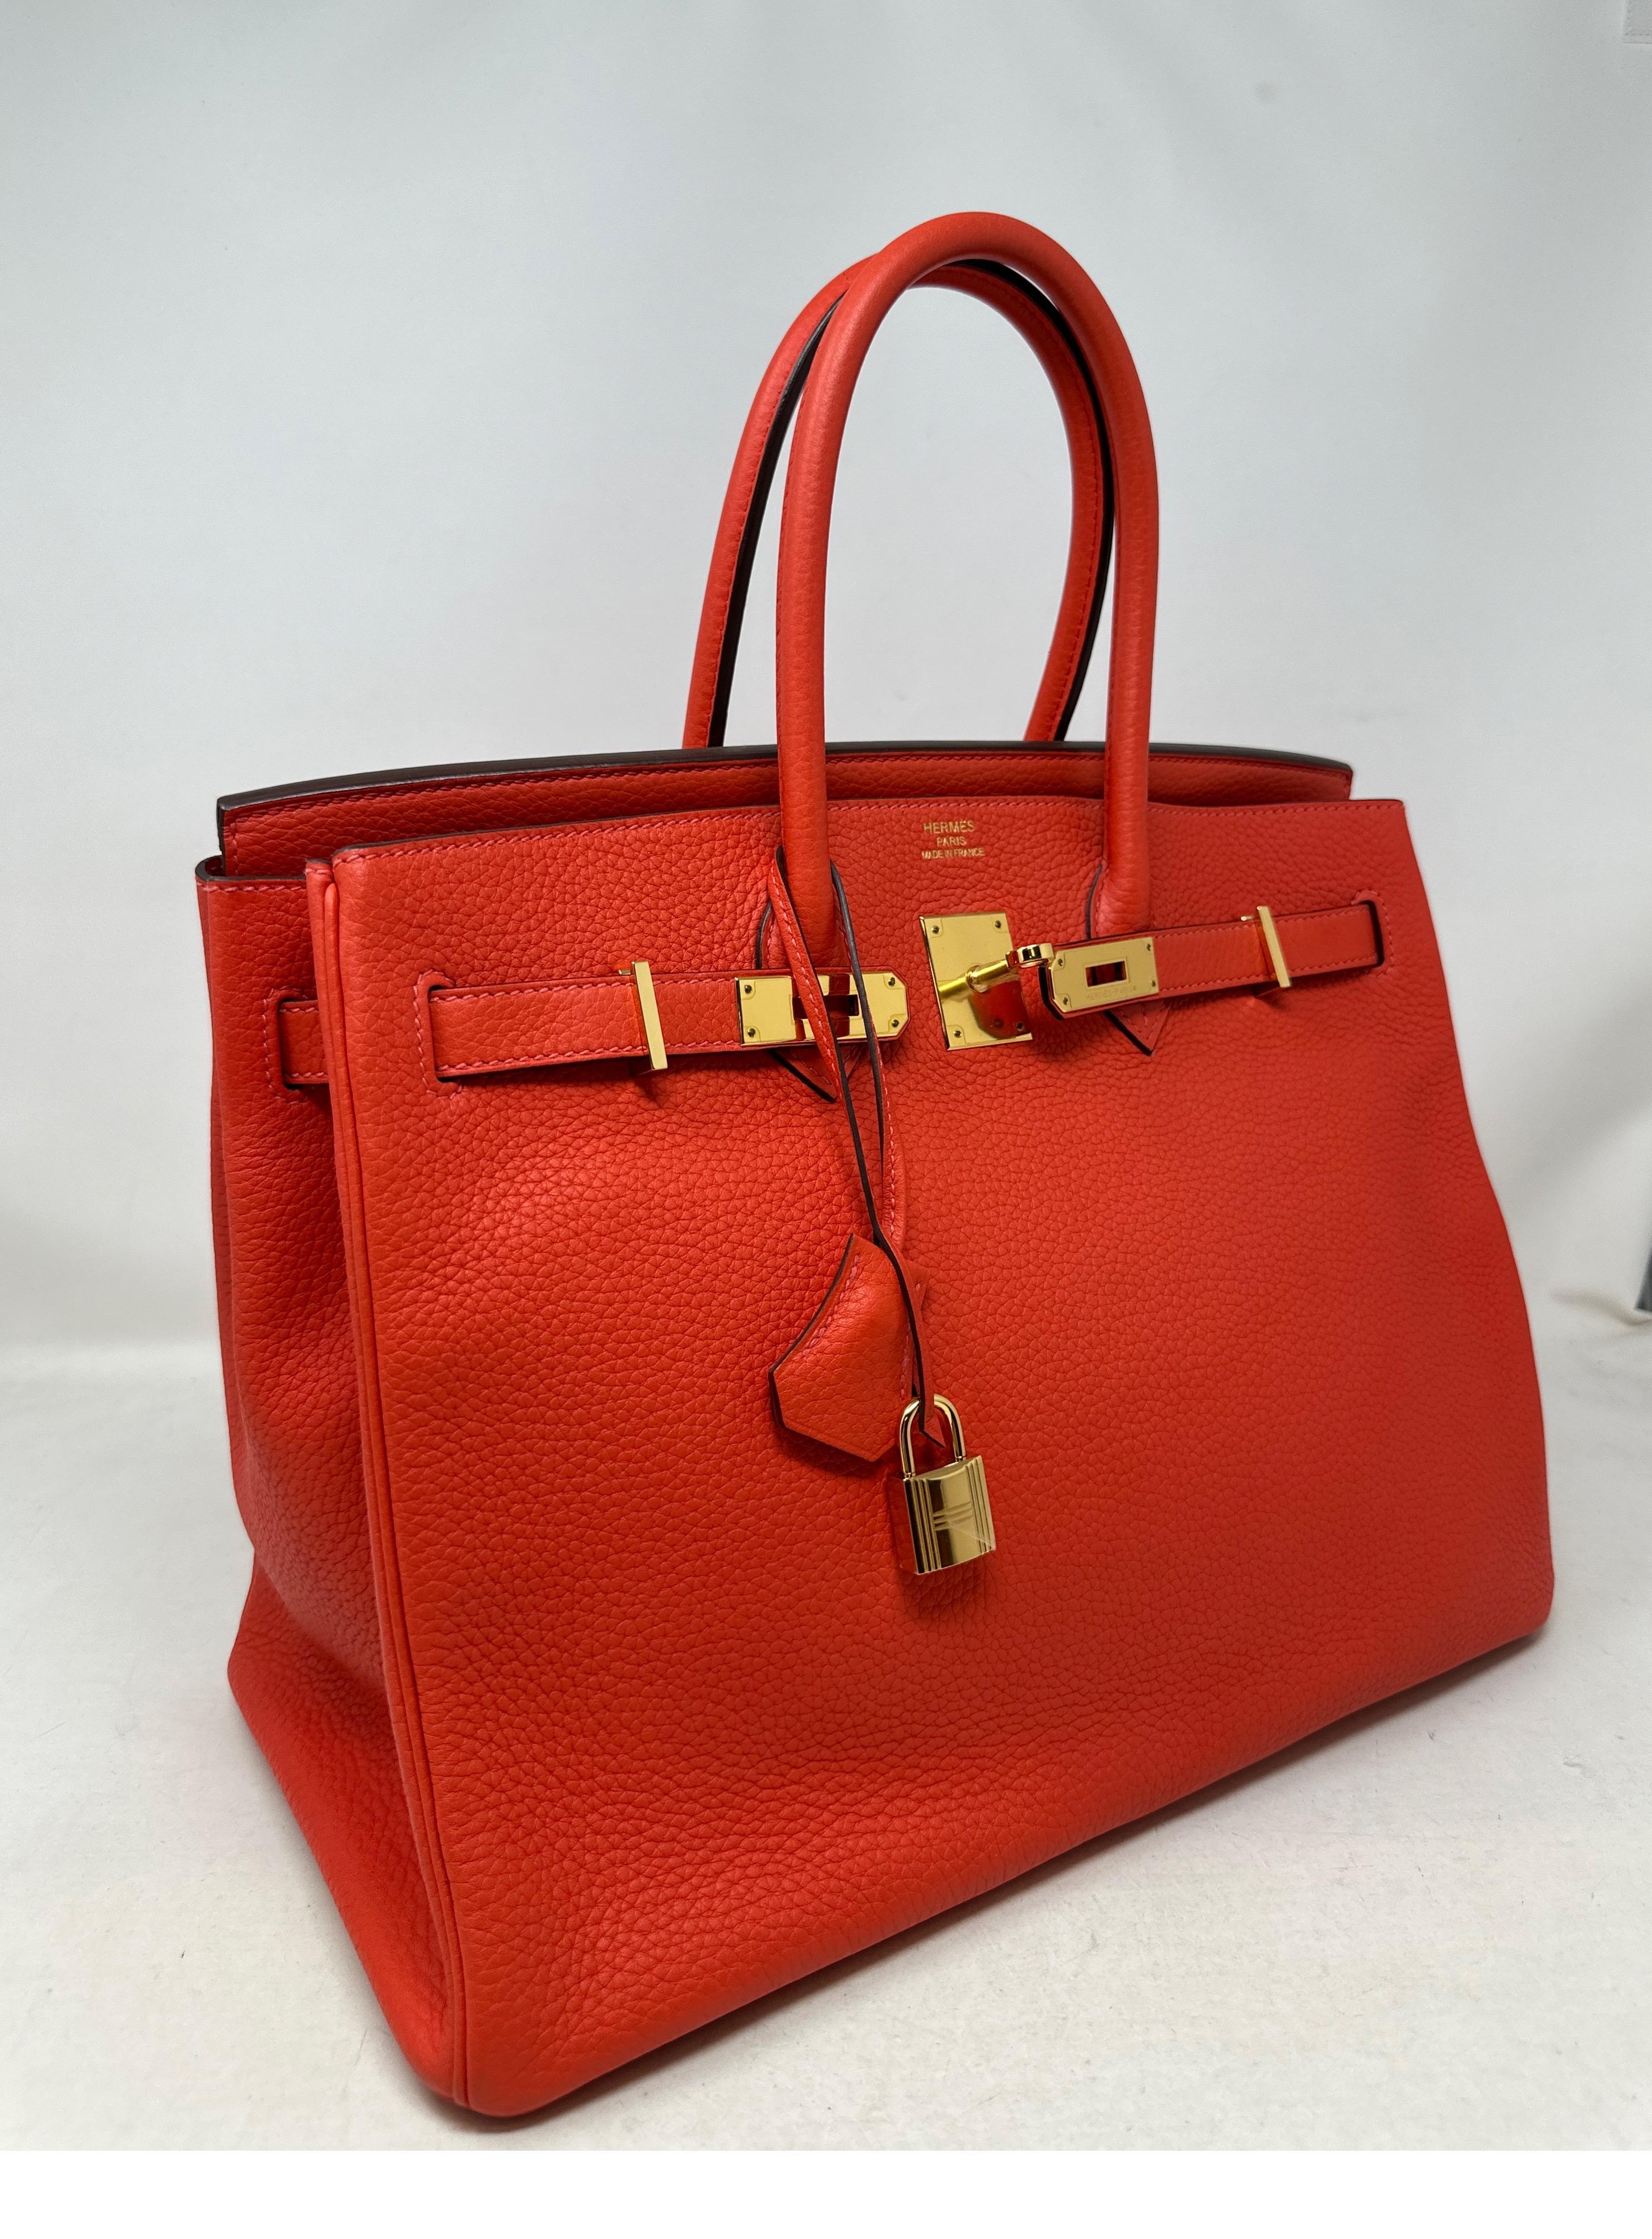 Hermes Capucine Birkin 35 Bag  In Excellent Condition For Sale In Athens, GA